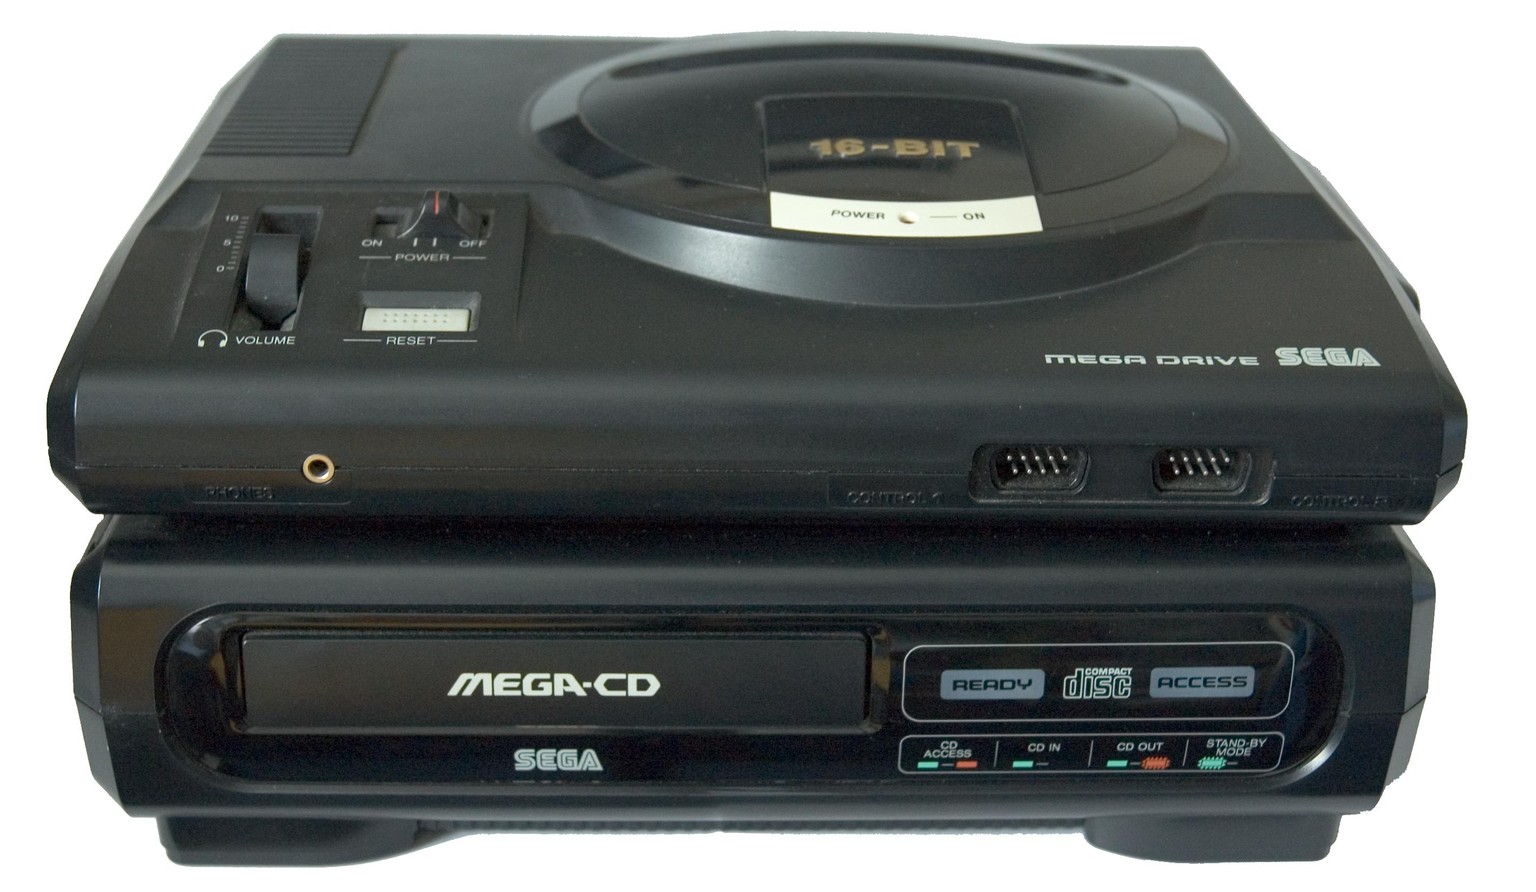 Die erste Version des Sega Mega-CD wurde unterhalb der Spielkonsole Mega Drive befestigt.